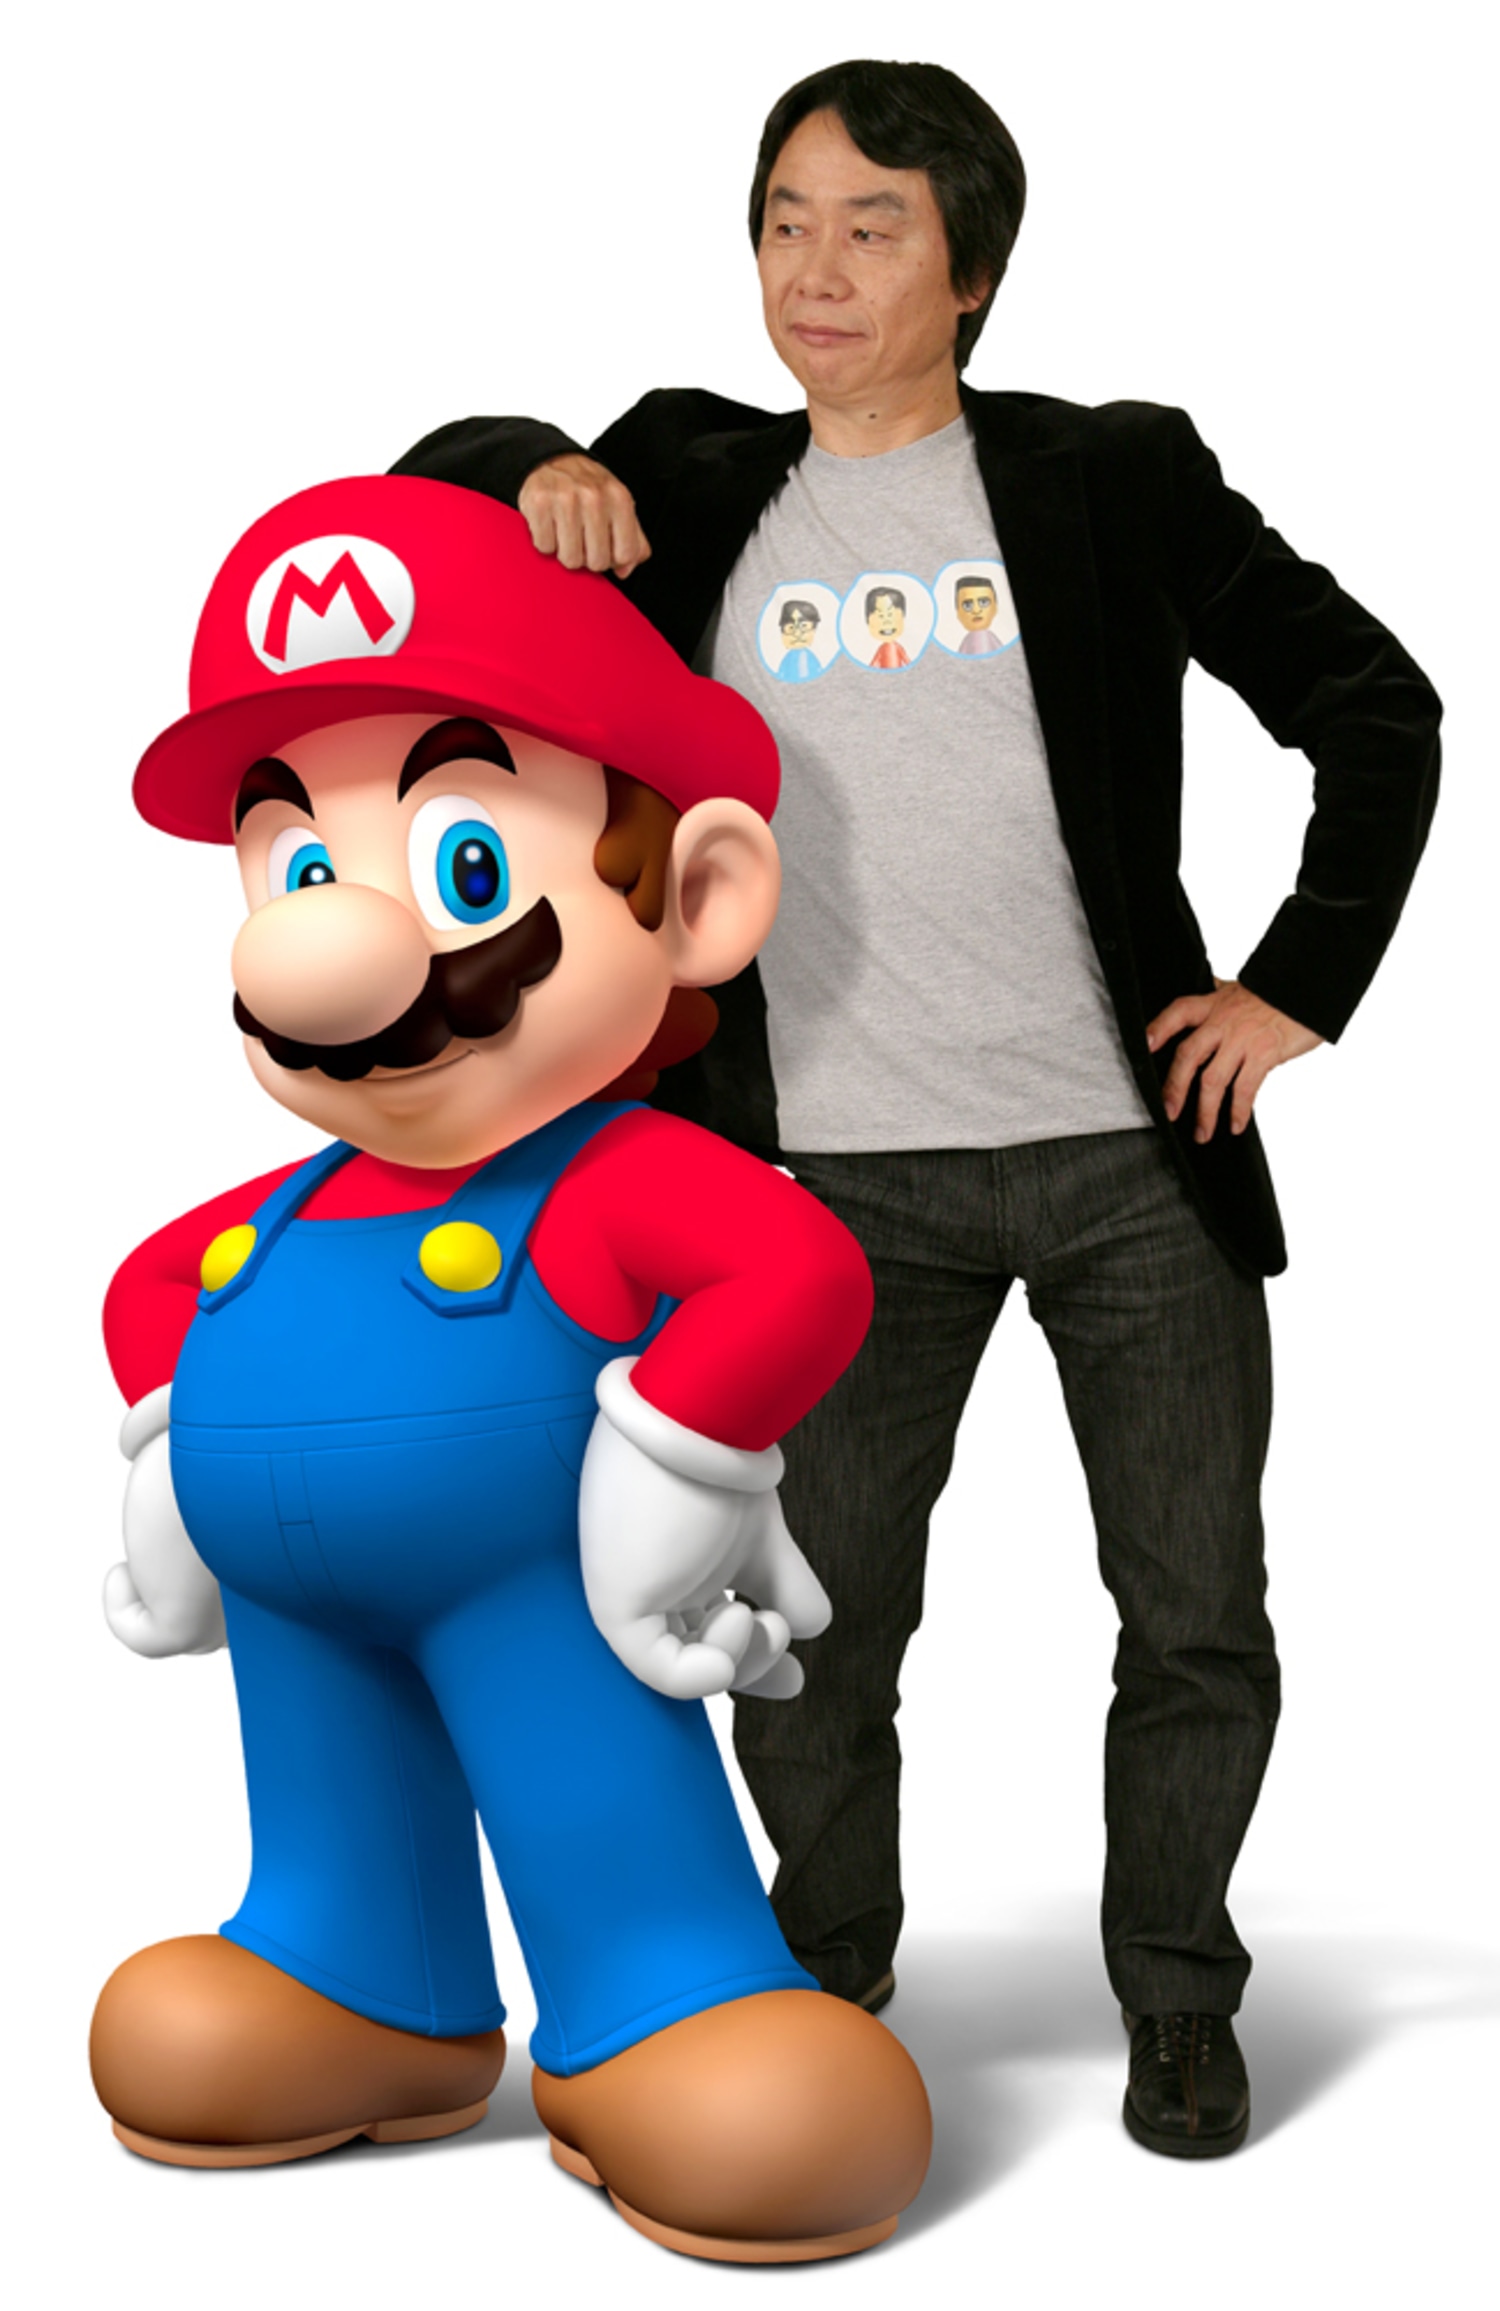 Pushing Buttons: Nintendo's Shigeru Miyamoto – what we owe the